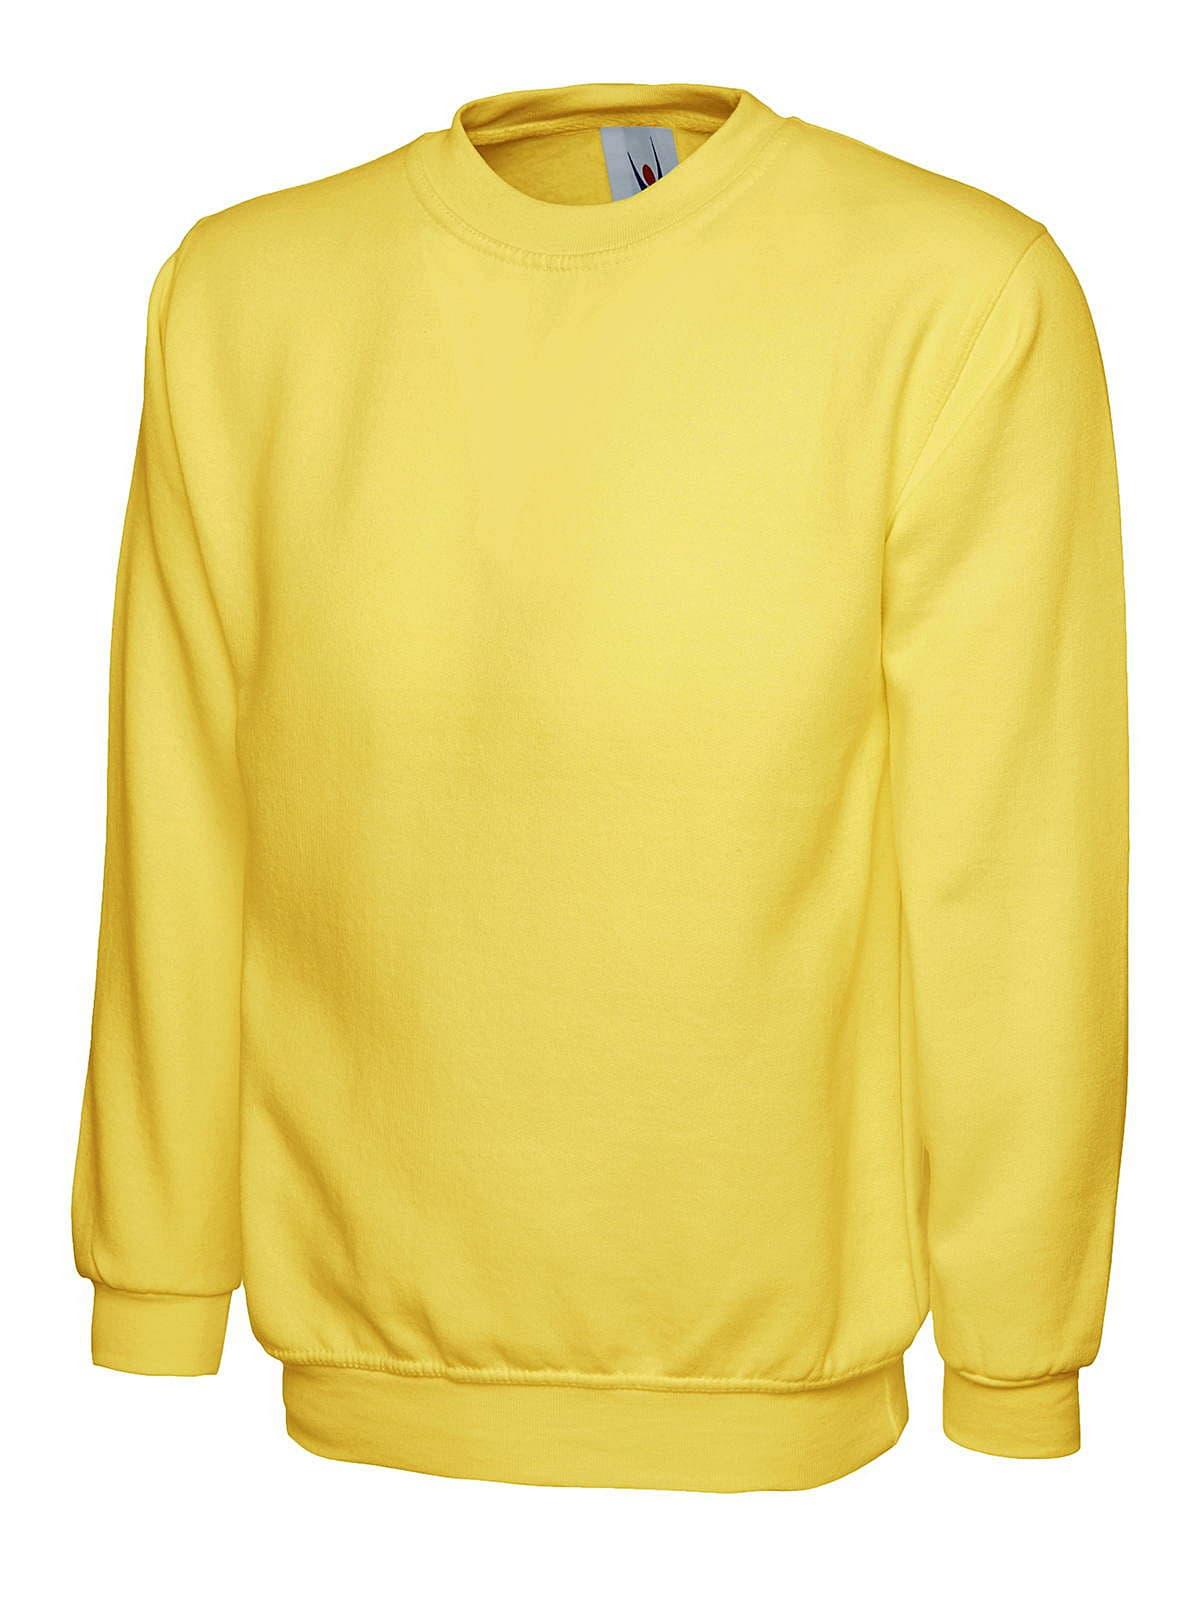 Uneek 300GSM Classic Sweatshirt in Yellow (Product Code: UC203)